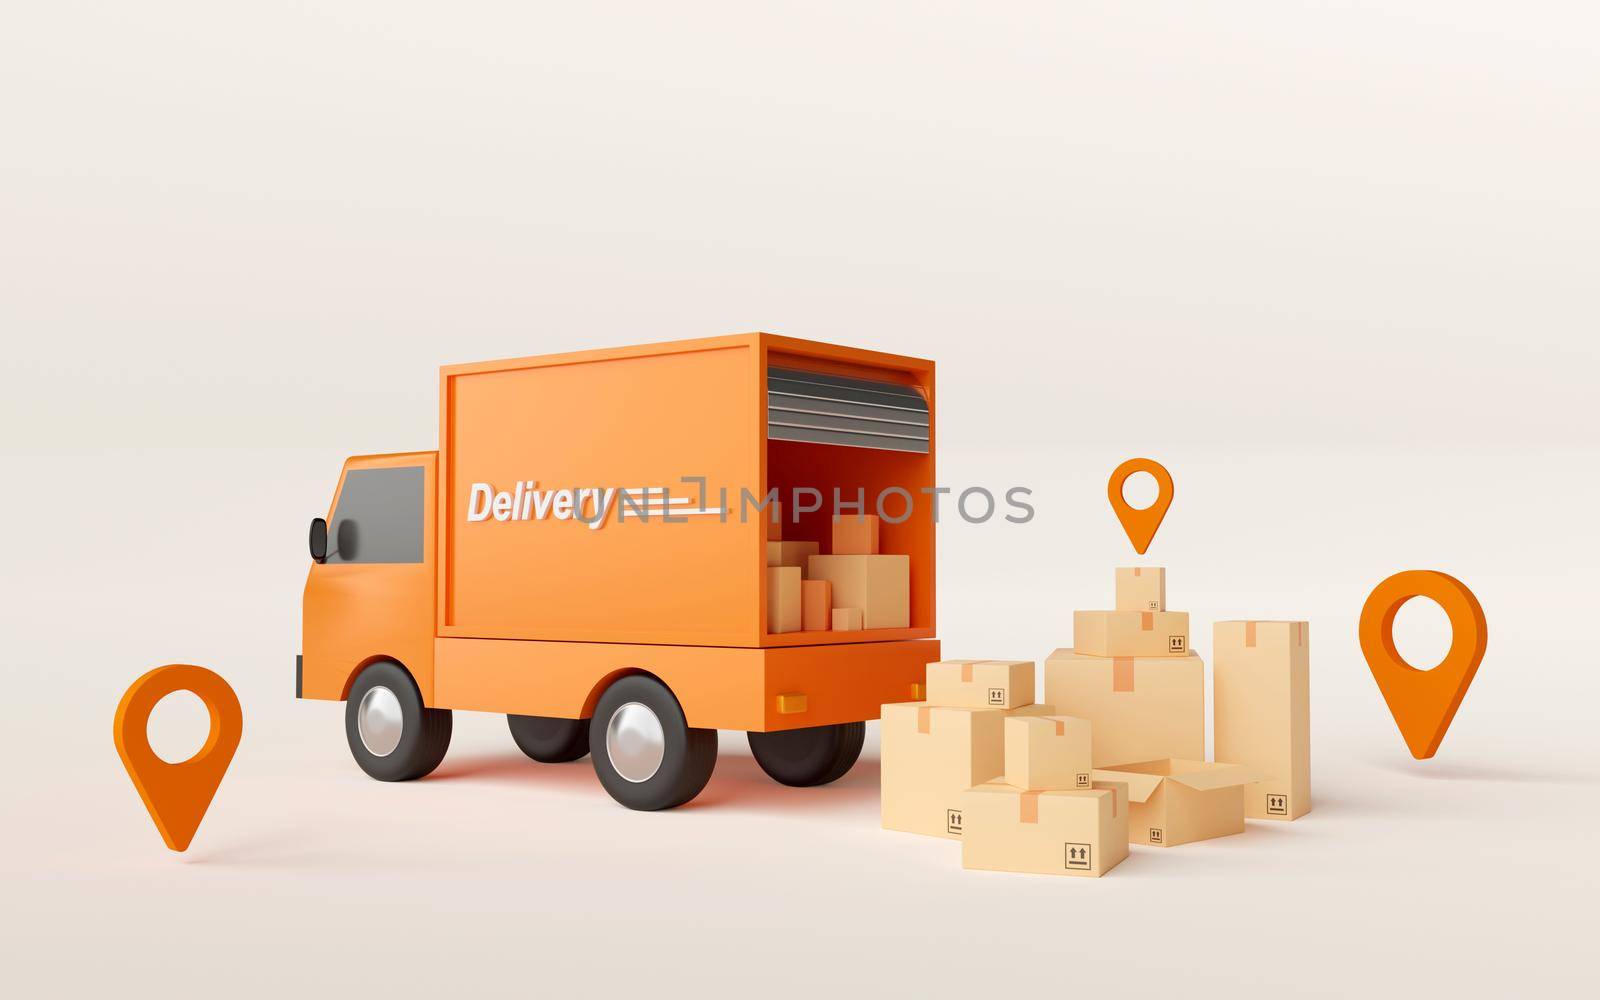 E-commerce concept, Transportation shipment delivery by truck, 3d illustration by nutzchotwarut